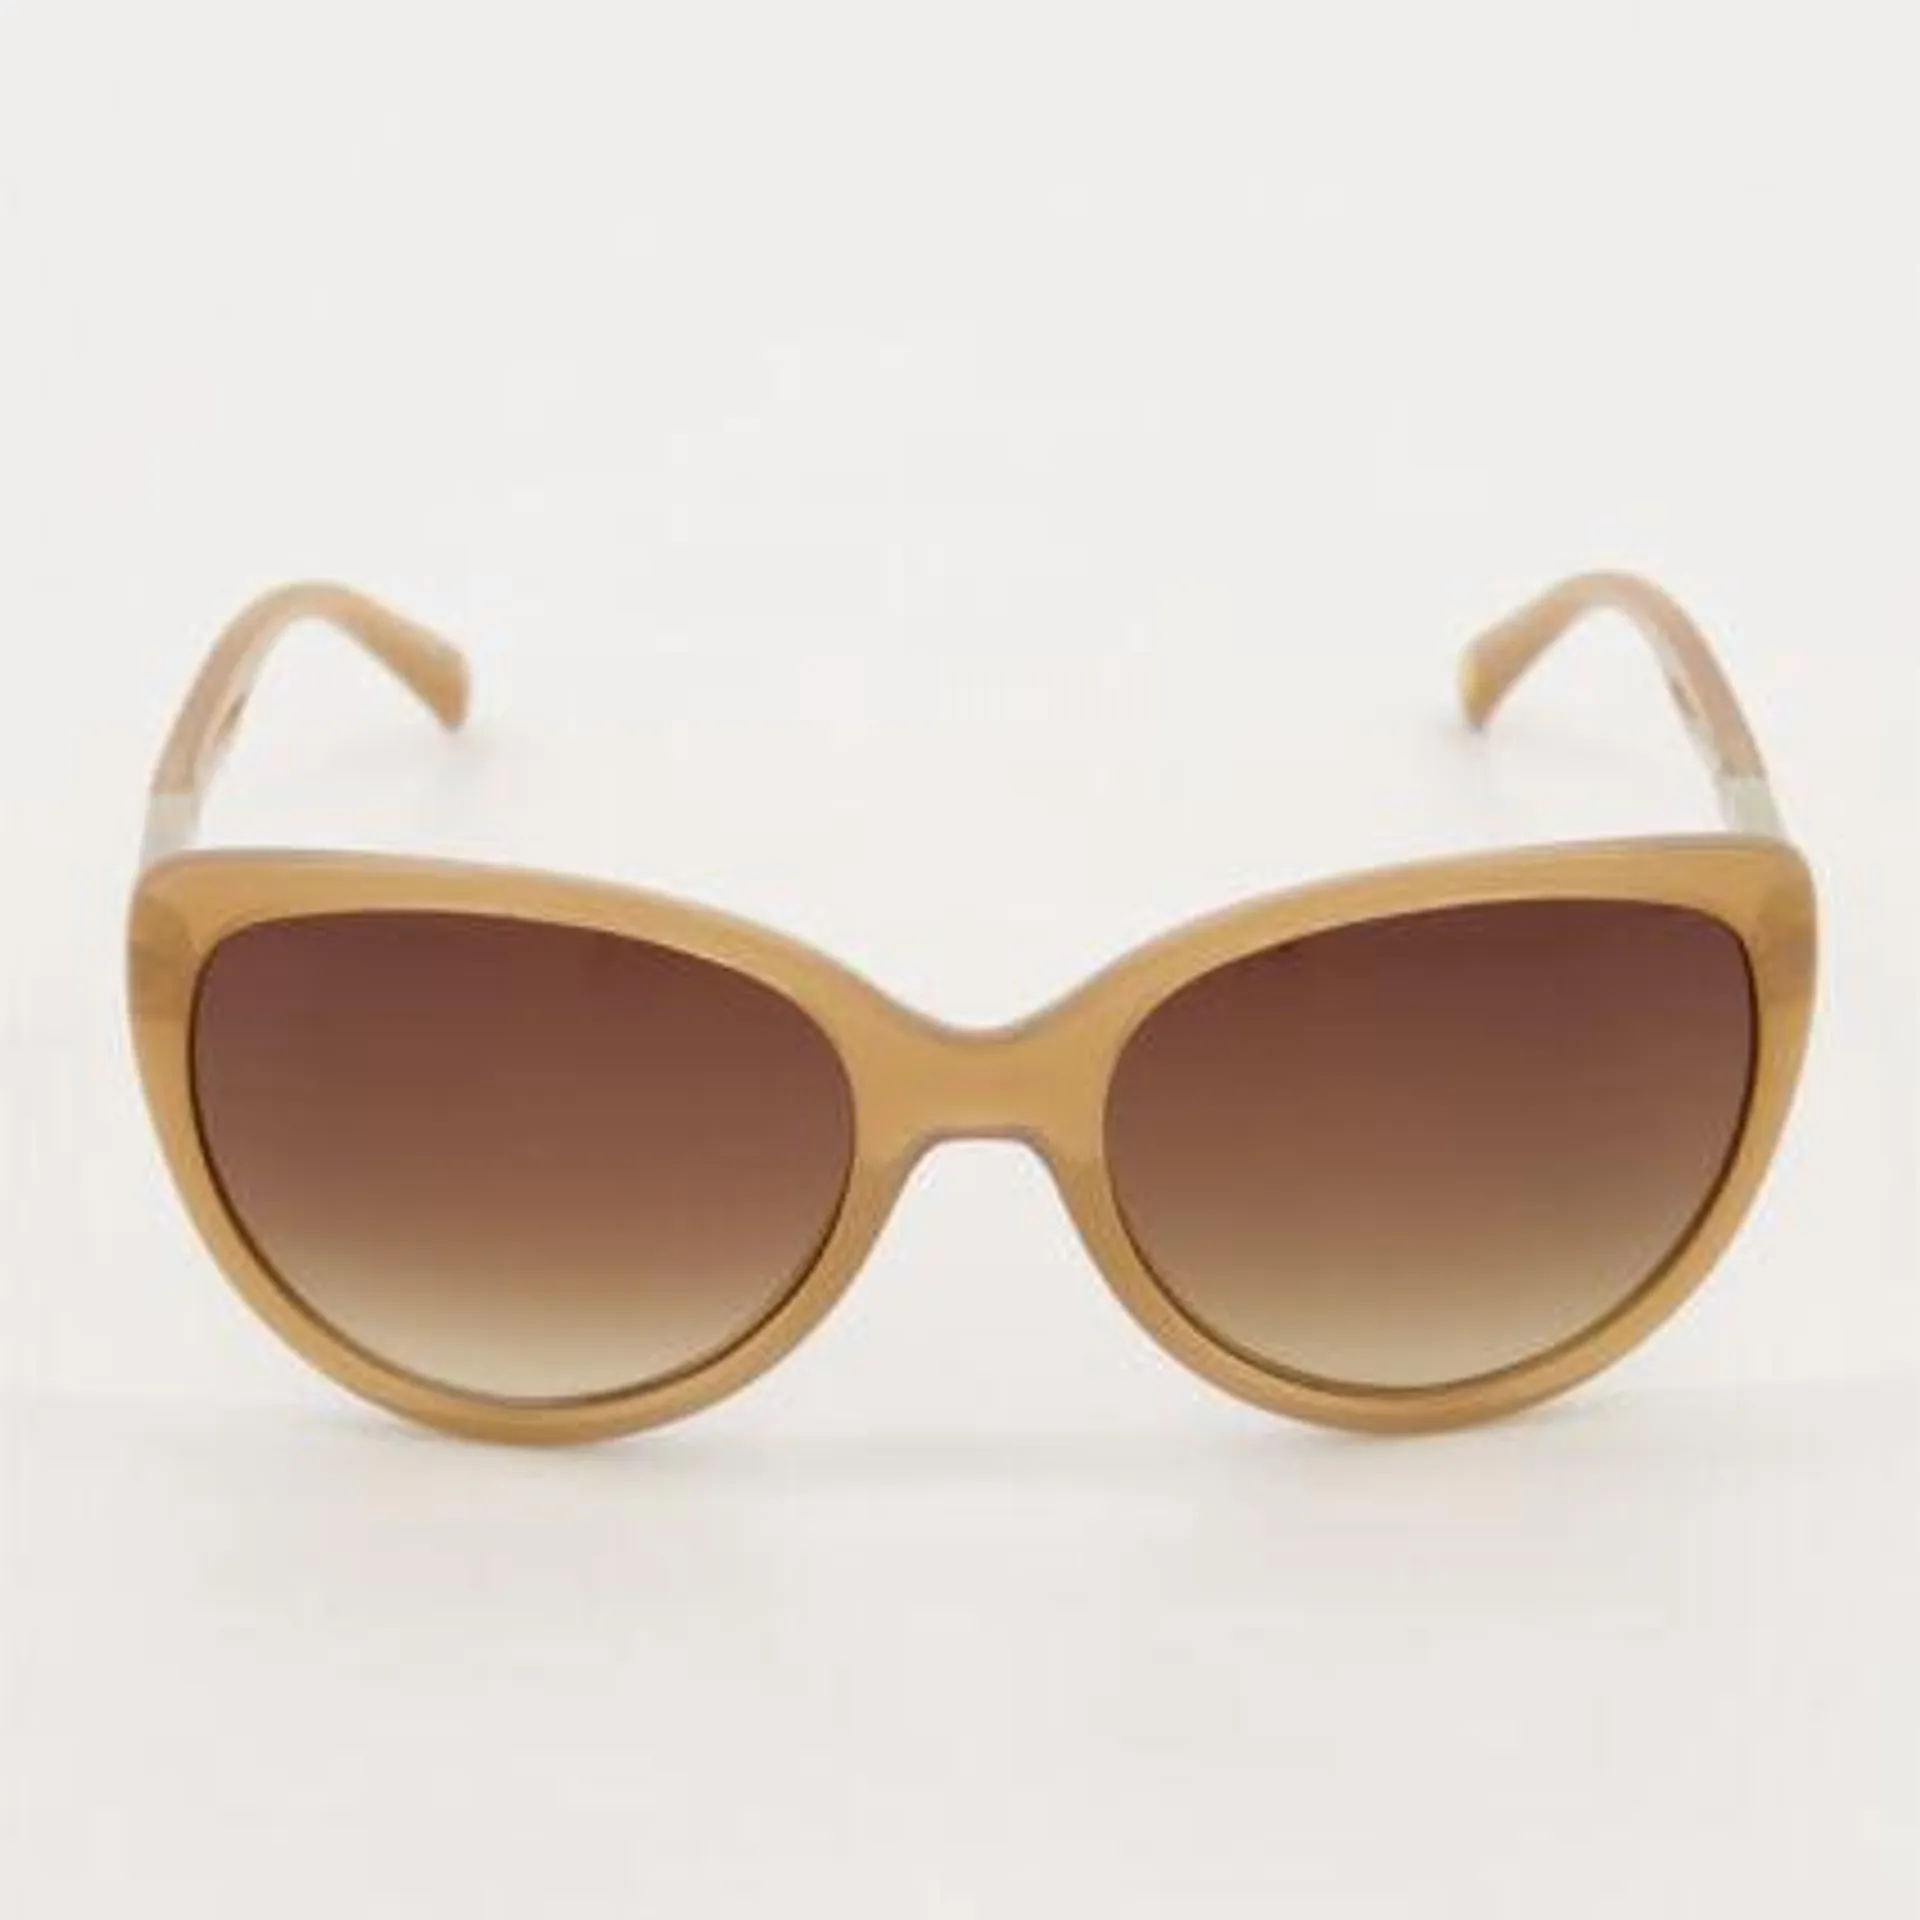 Camel Brown Cat Eye Sunglasses